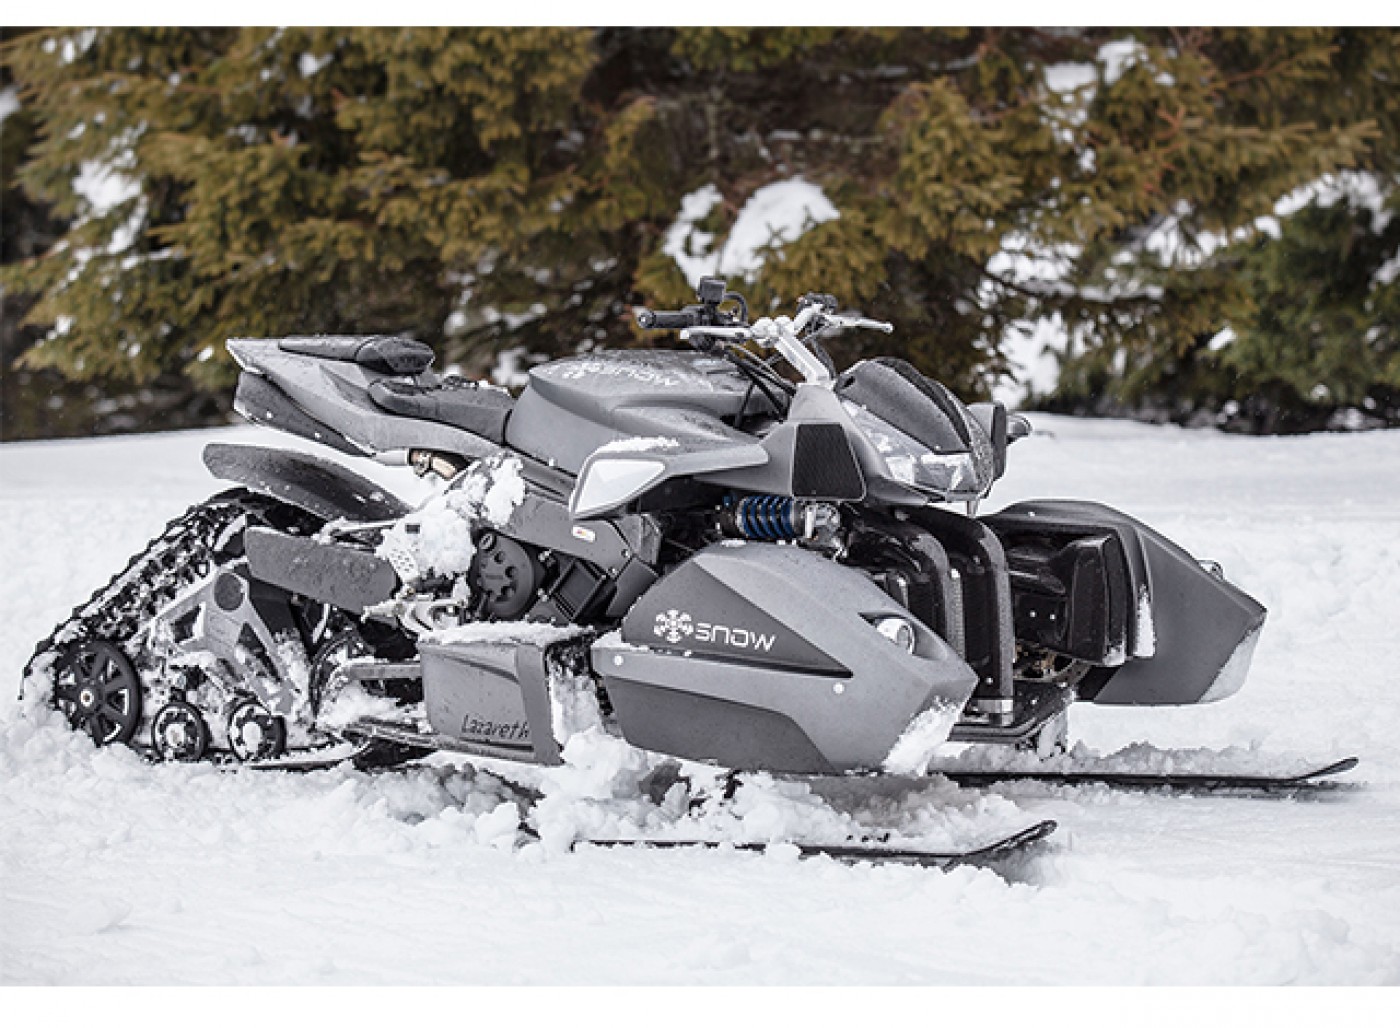 Wazuma Snow – Yamaha R1 pentru zăpadă